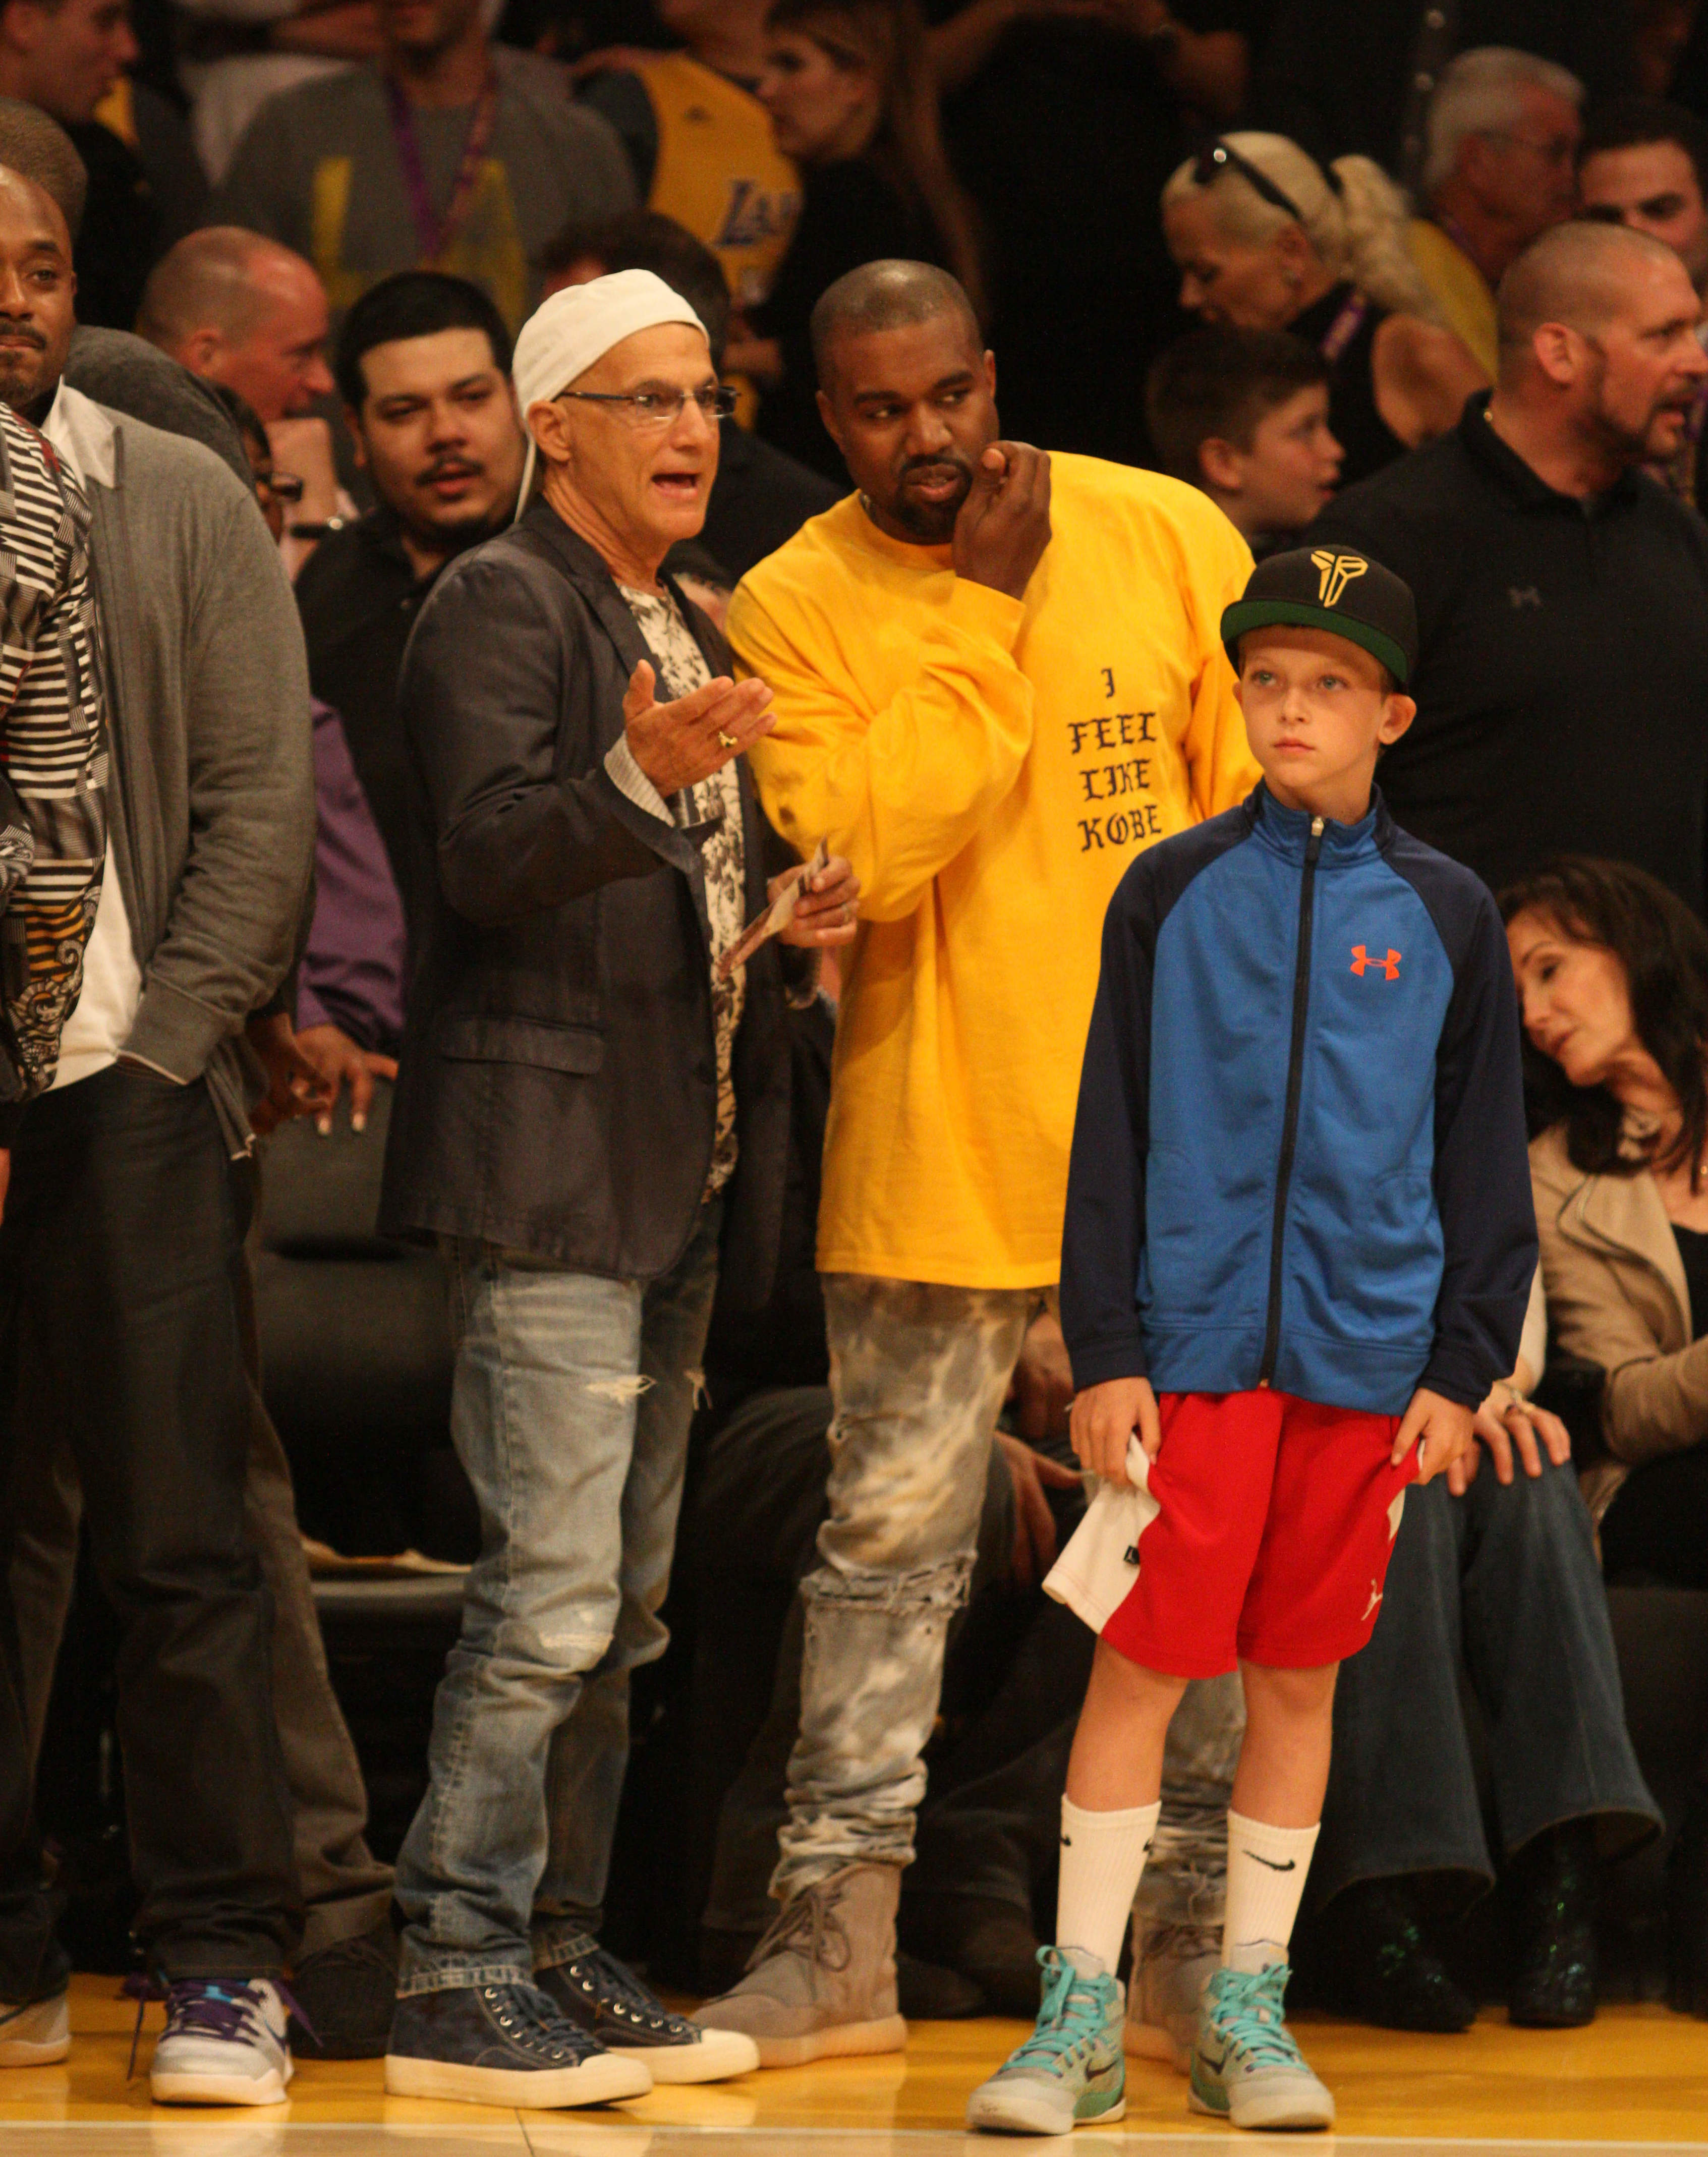 Jimmy Iovine and Kanye West